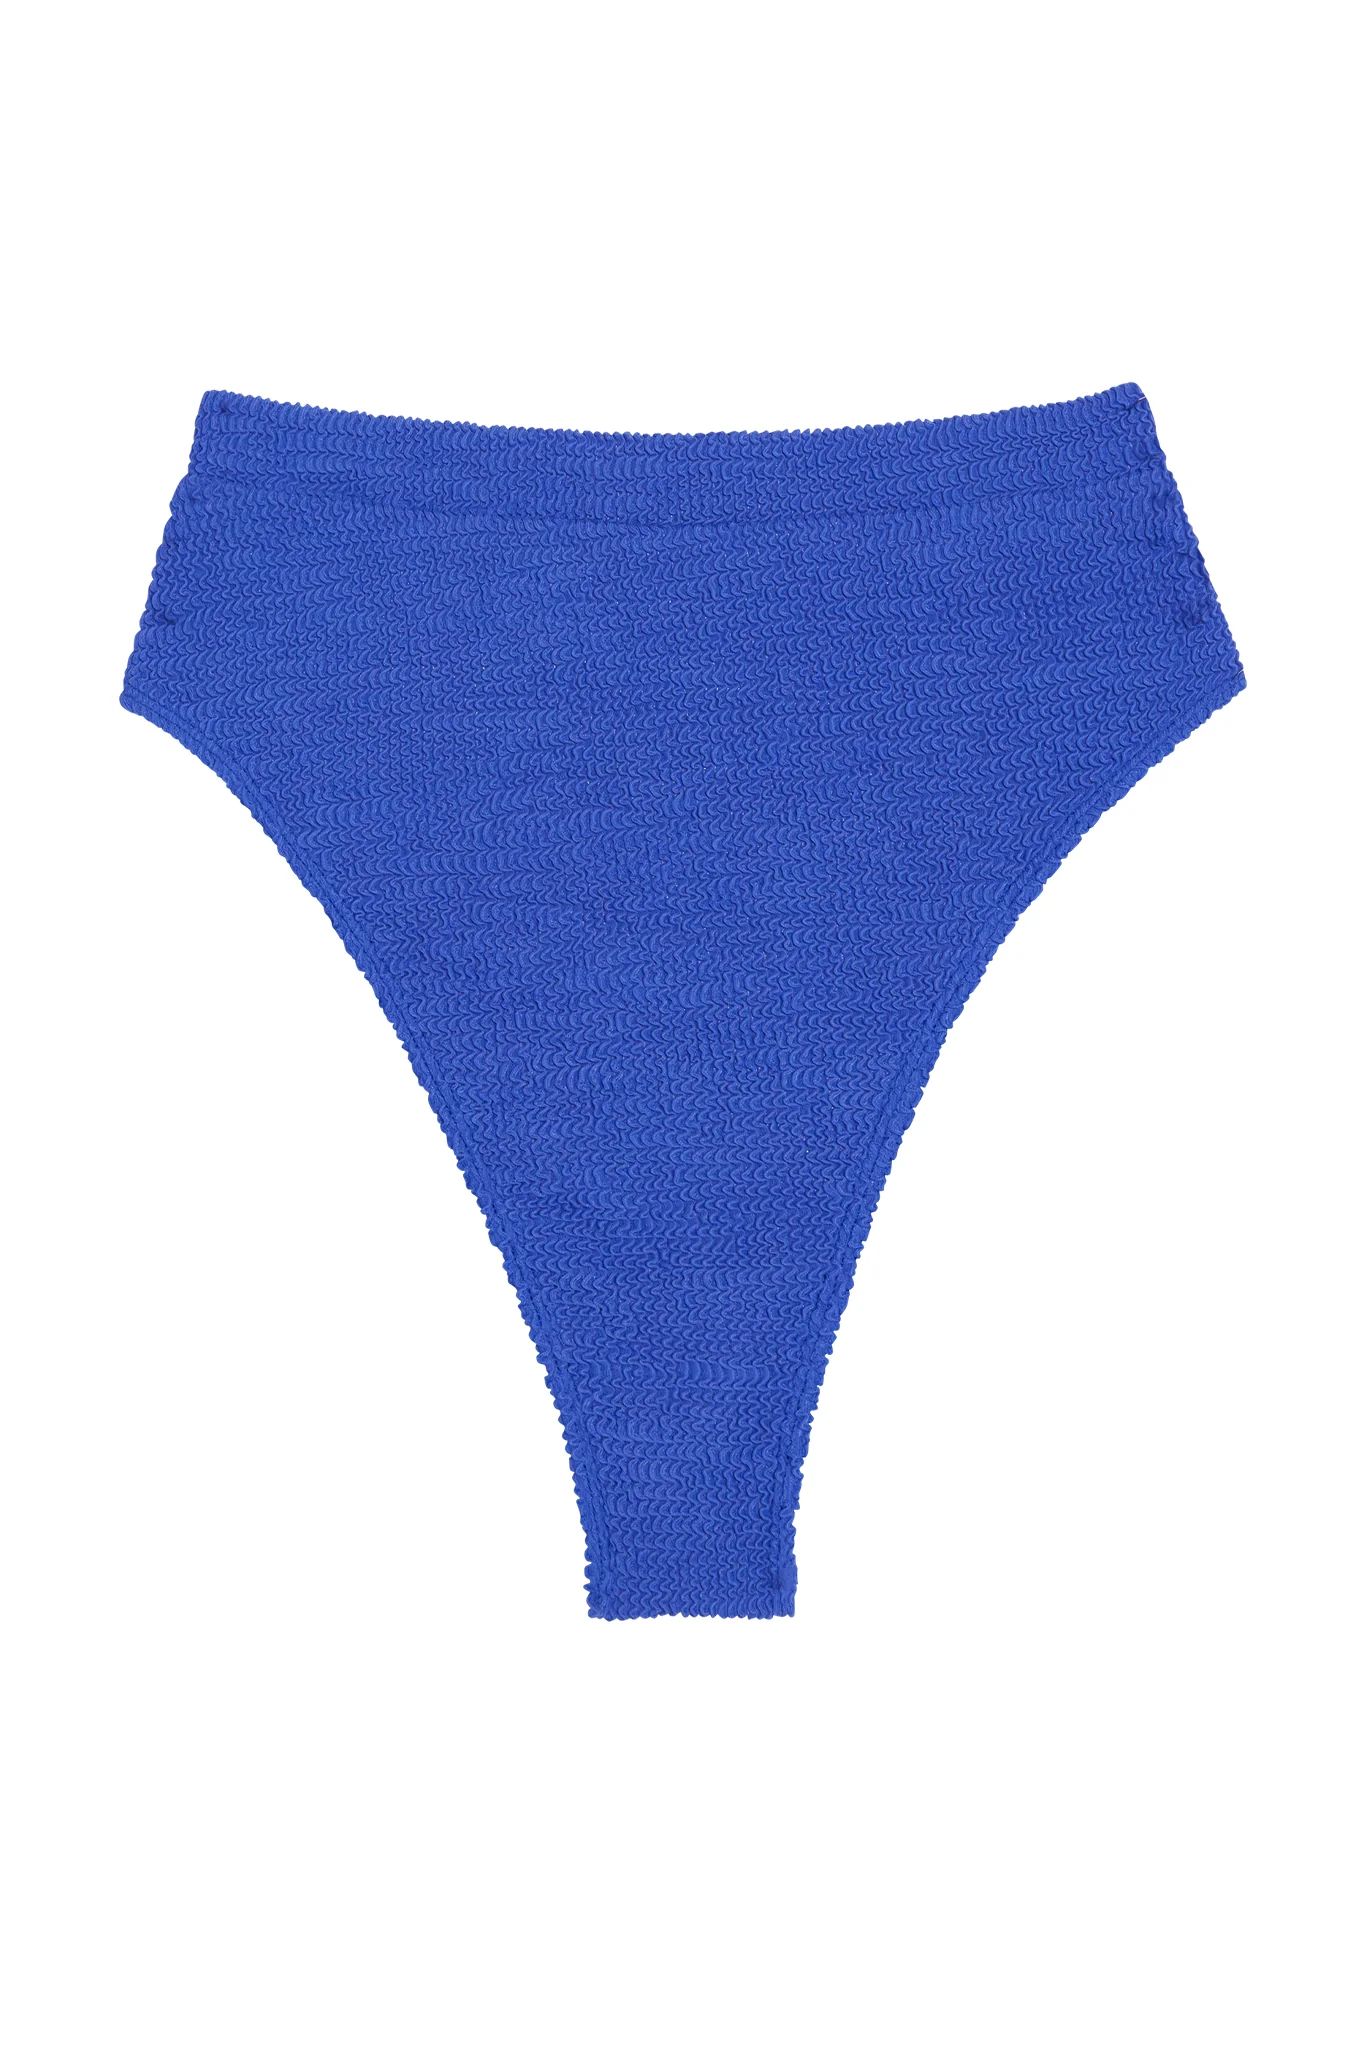 Riviera Bottom - Cobalt Crinkle | Monday Swimwear